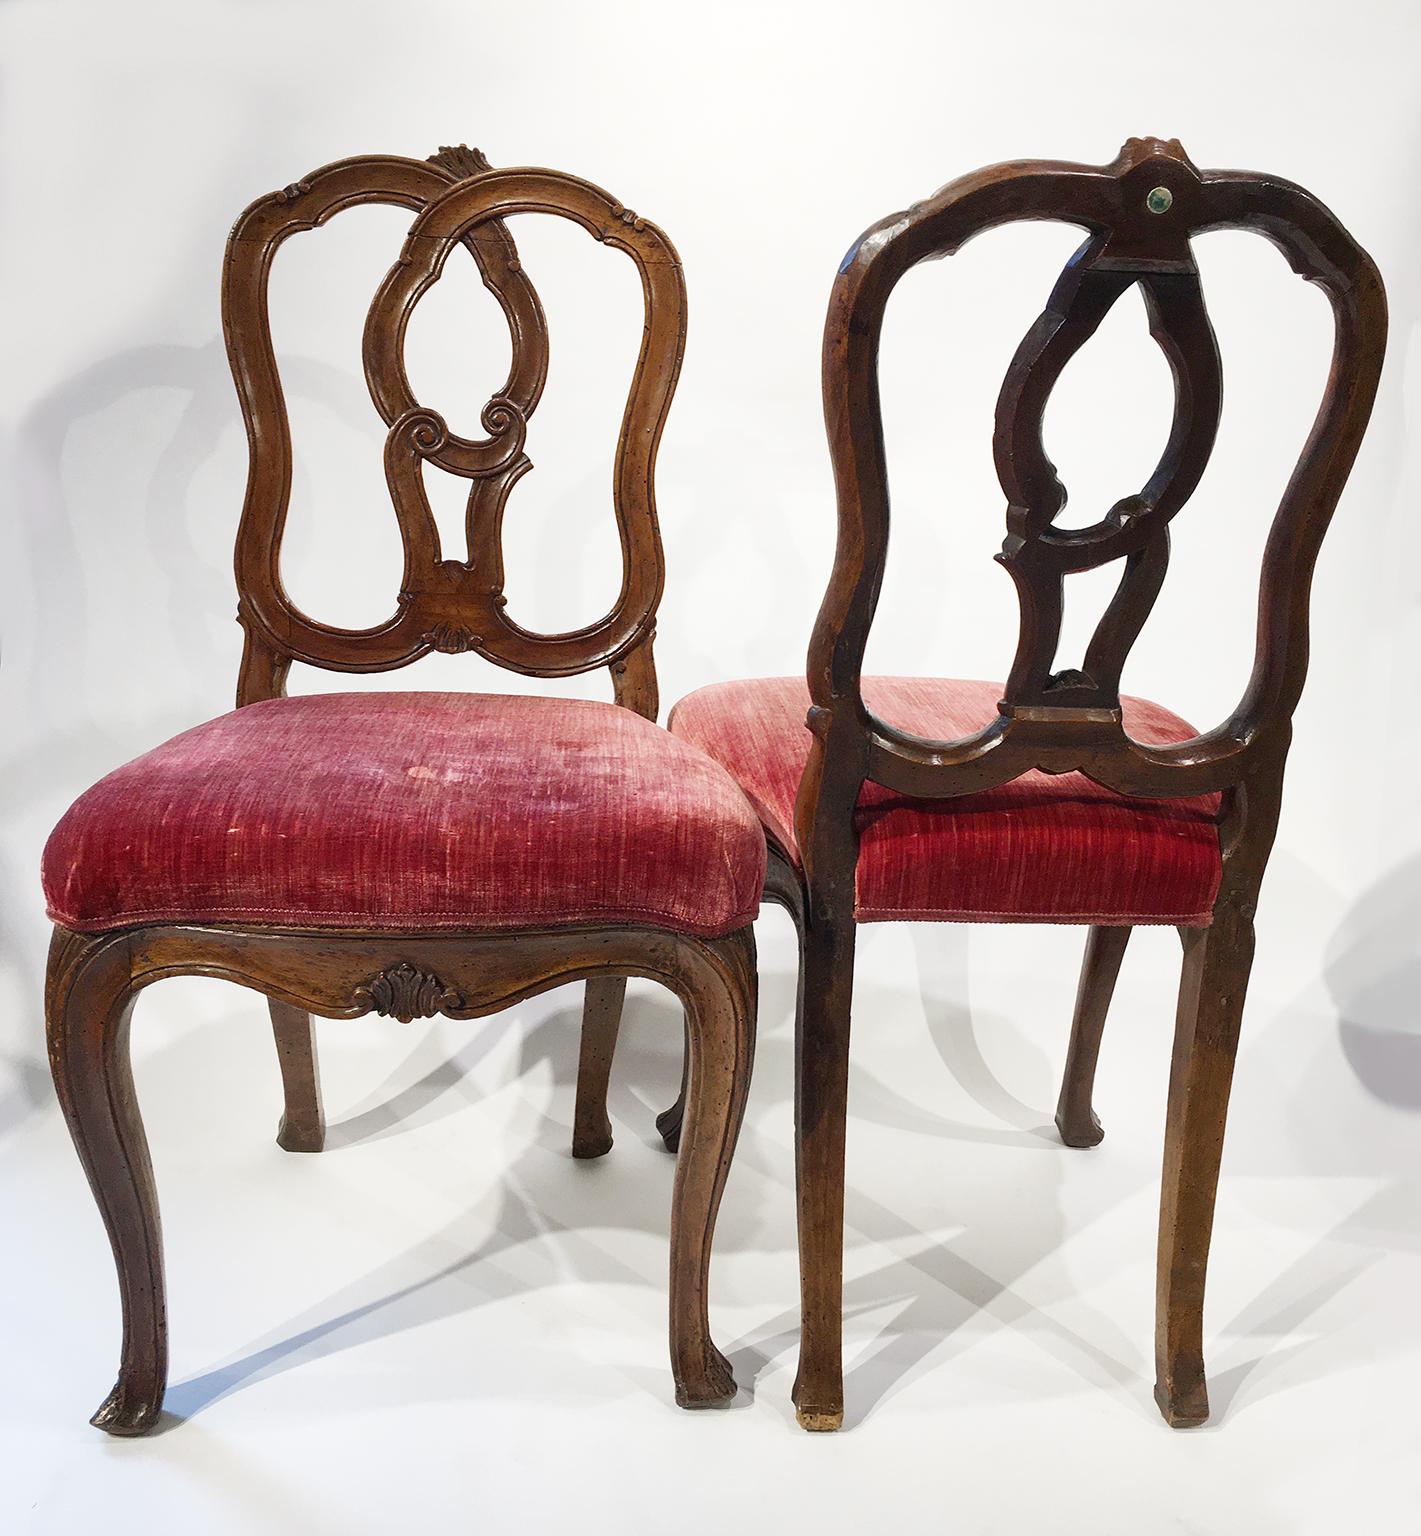 Six Mid-18th Century Italian Chairs, Venice, circa 1750 For Sale 14